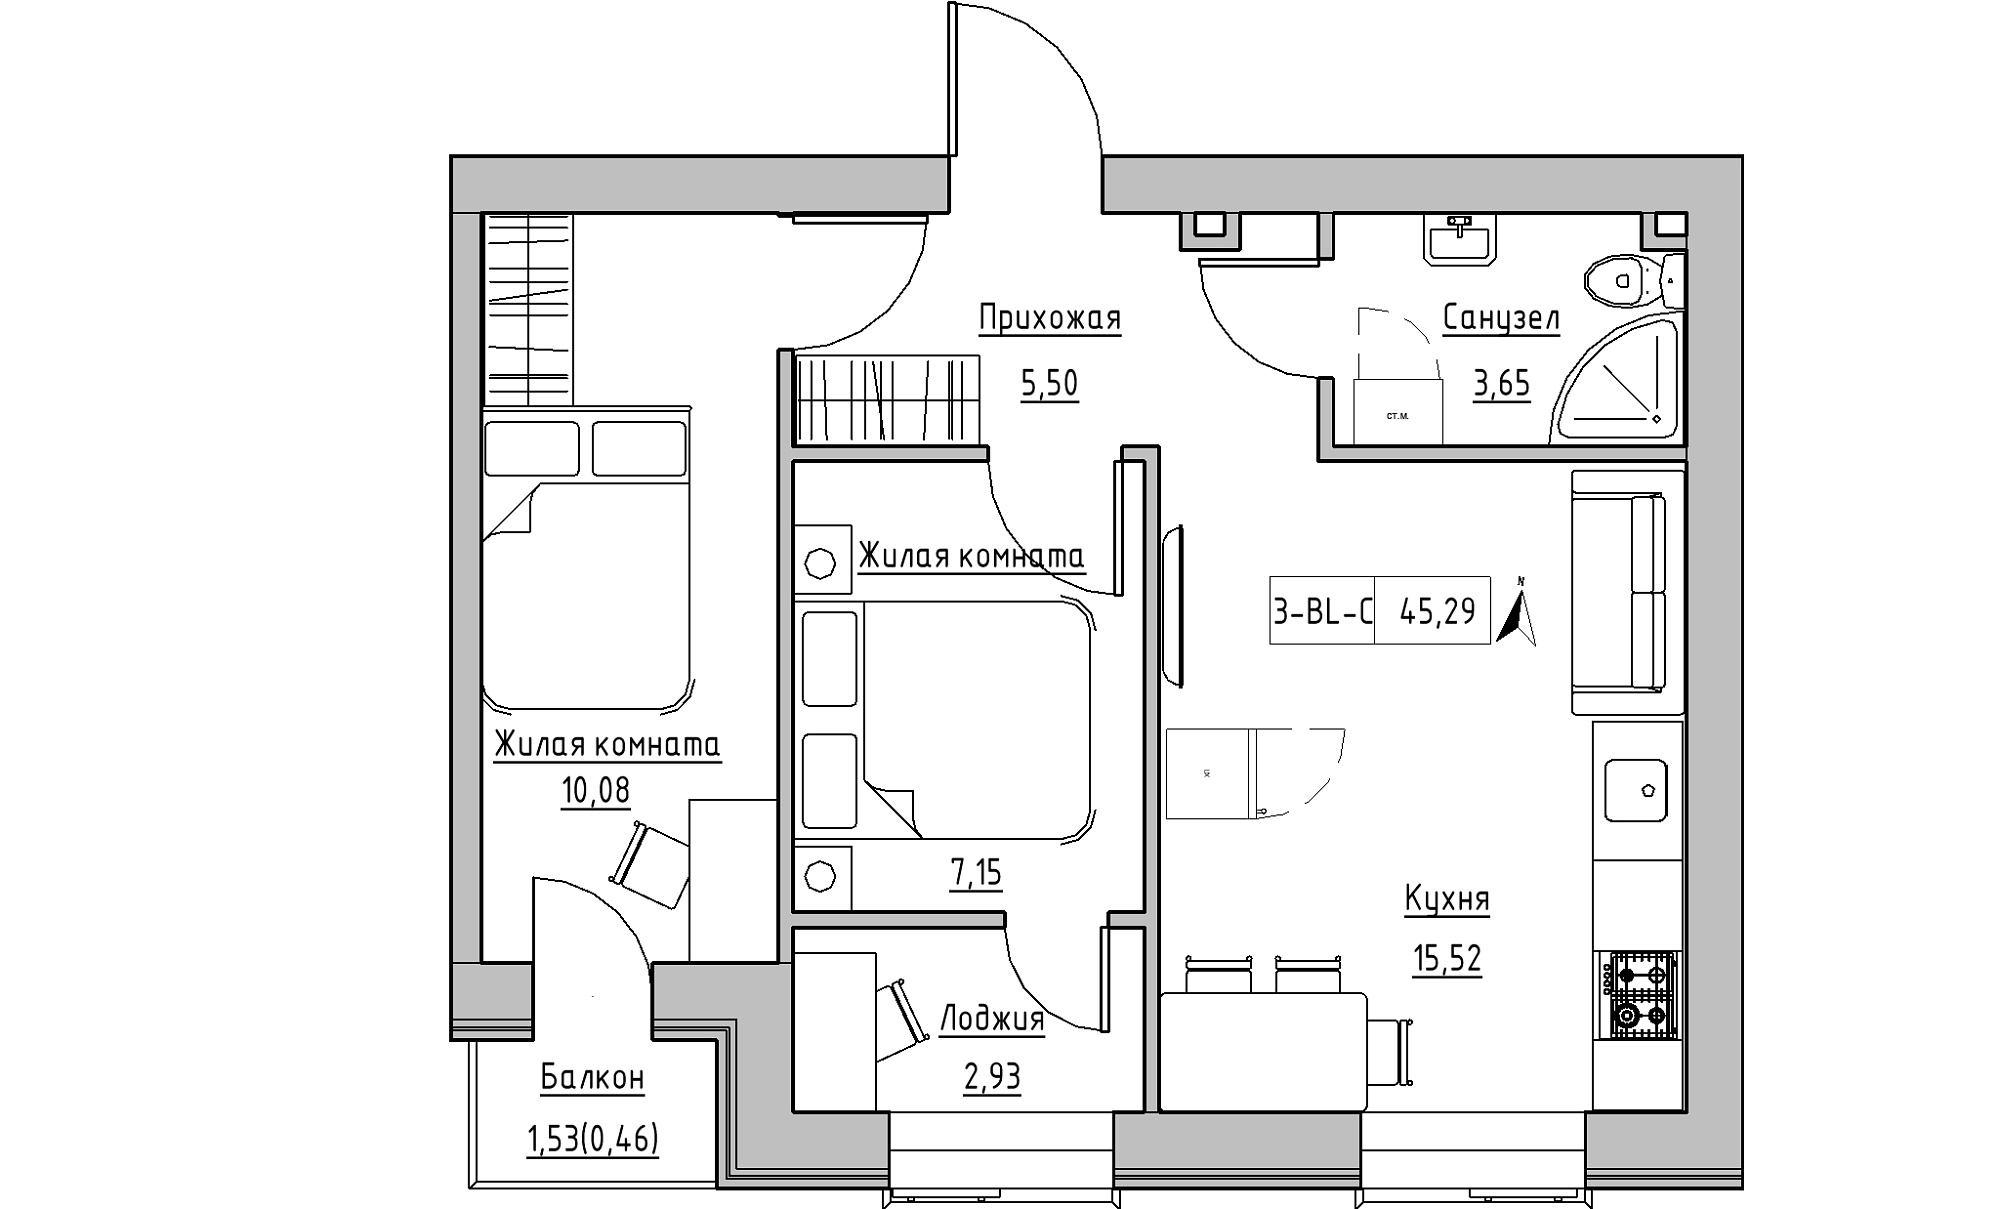 Planning 2-rm flats area 45.29m2, KS-016-02/0008.